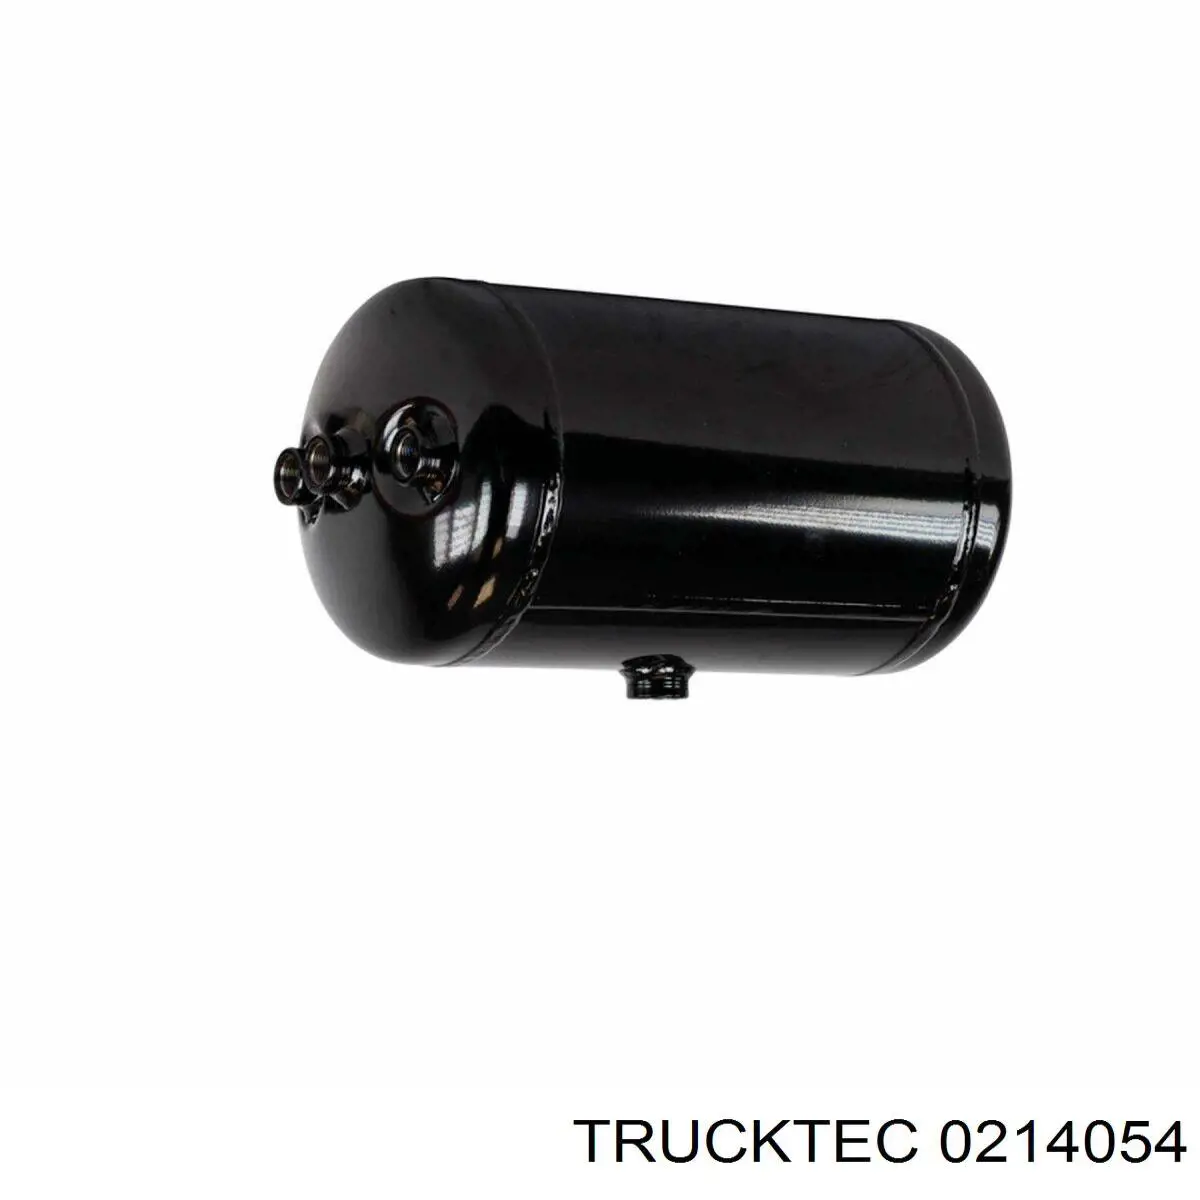 02.14.054 Trucktec tubo coletor de admissão